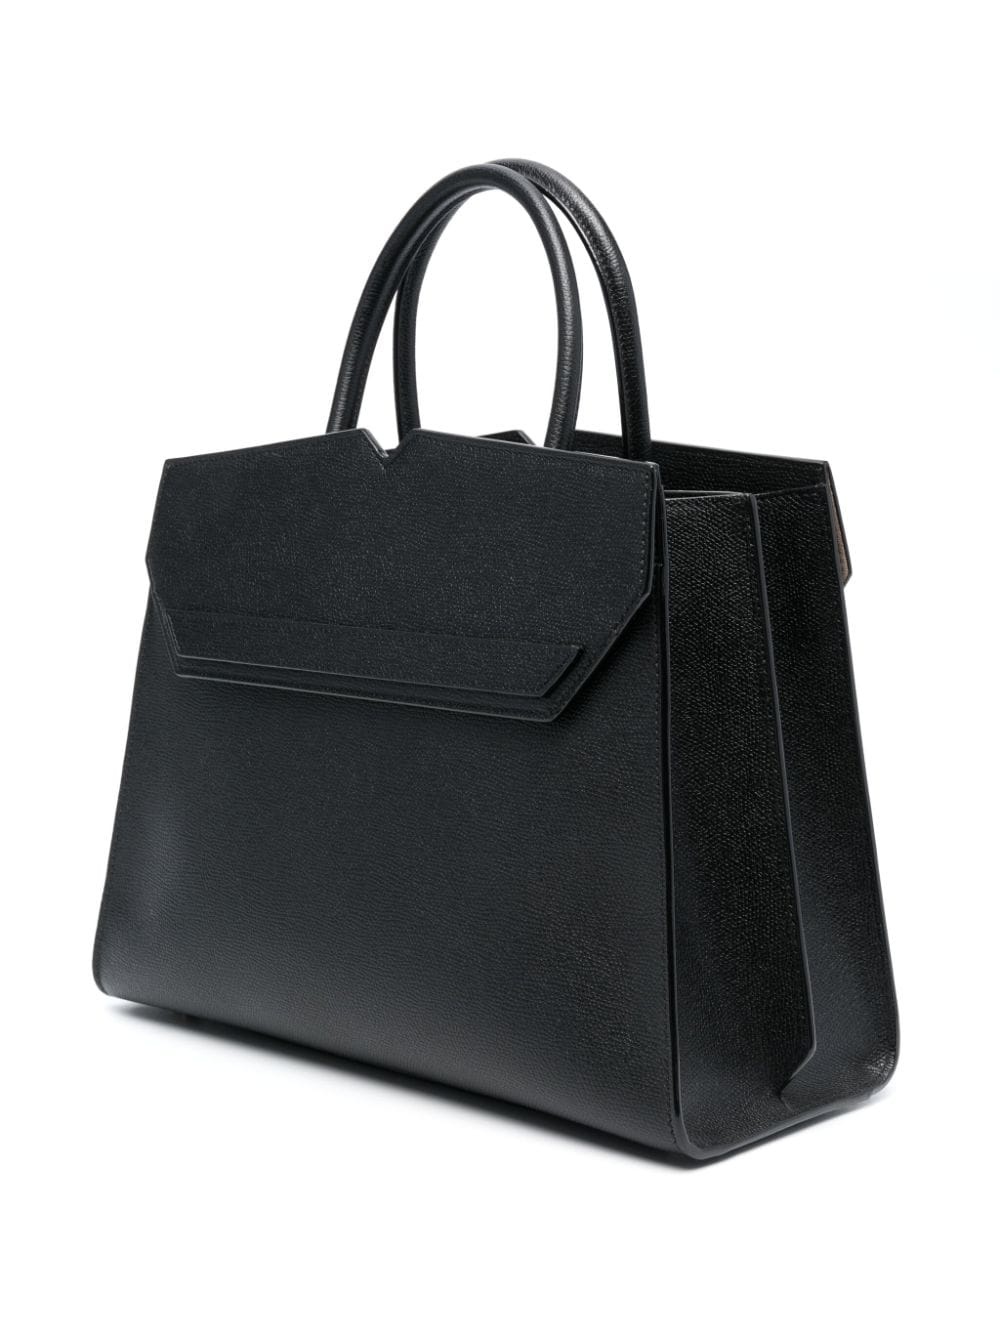 flap structured handbag - 3